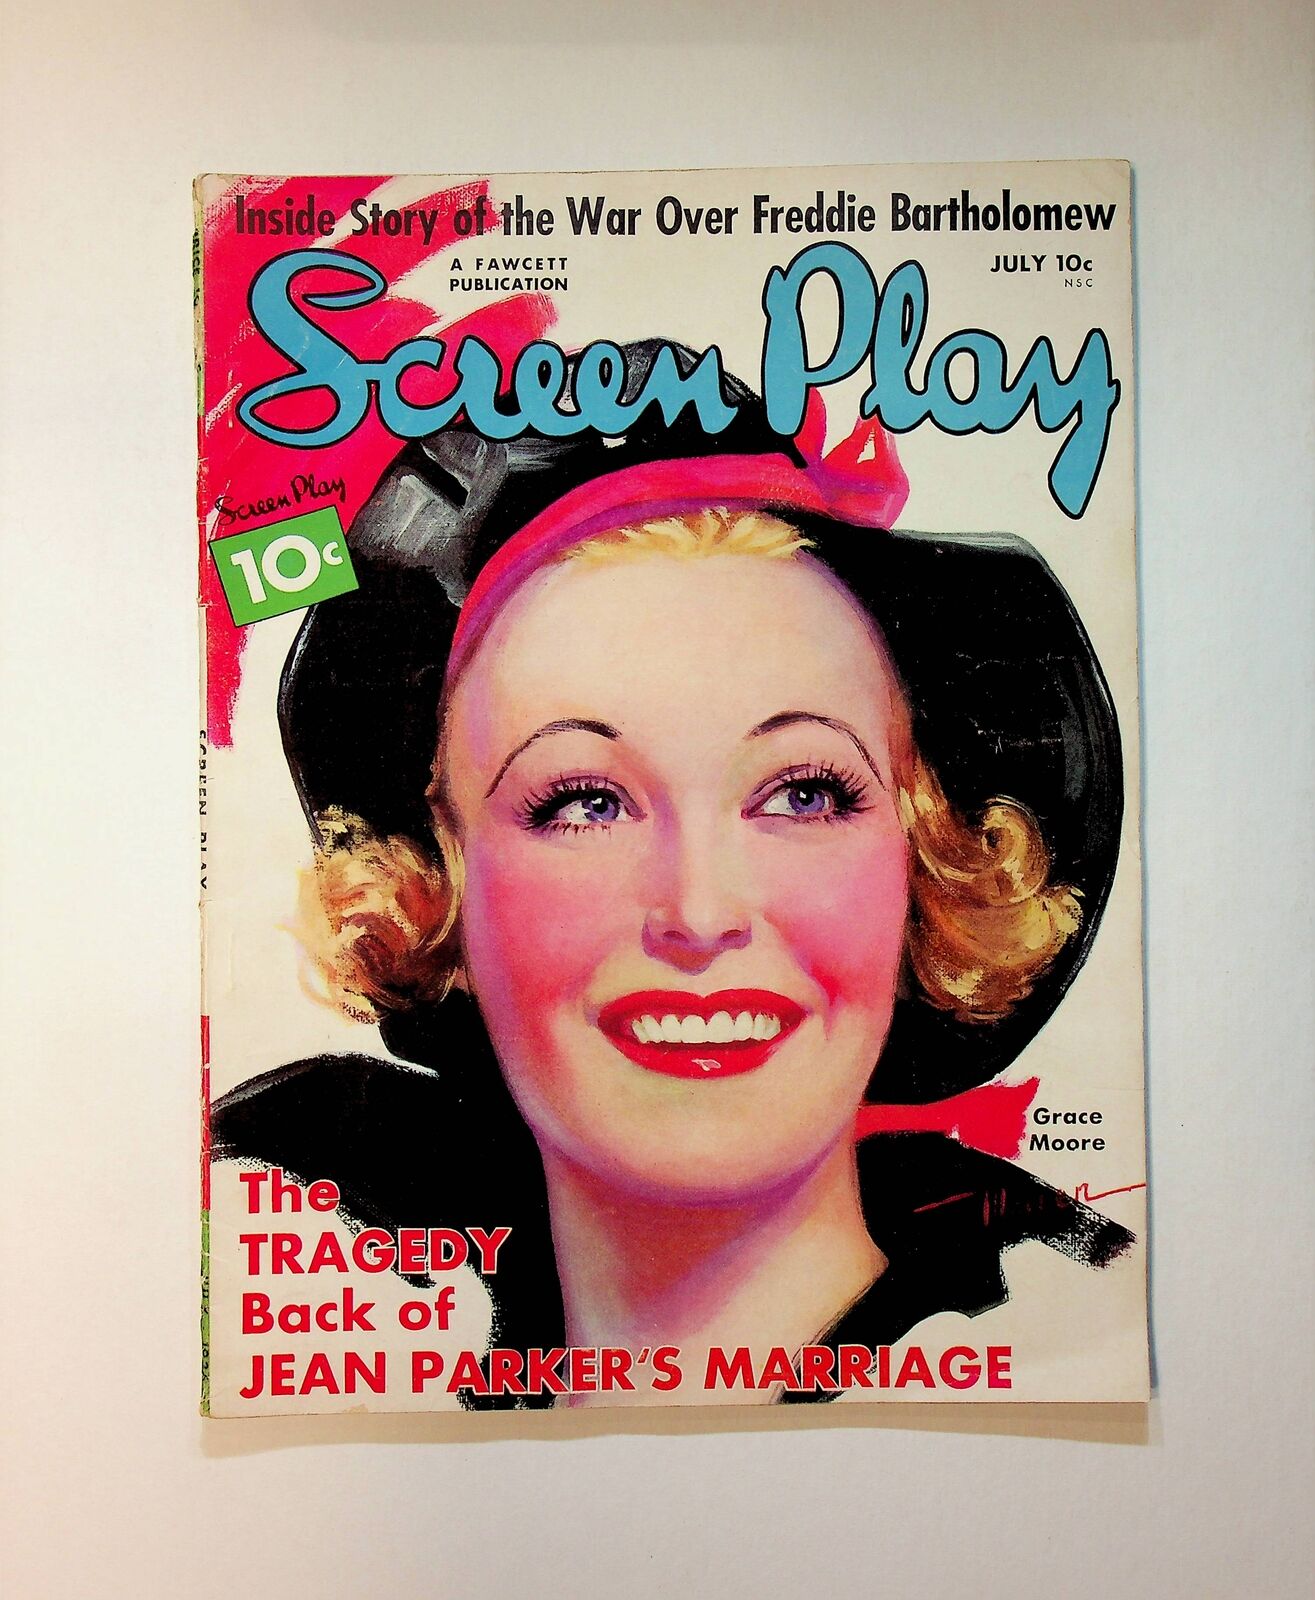 Screen Play Magazine Jul 1936 VG